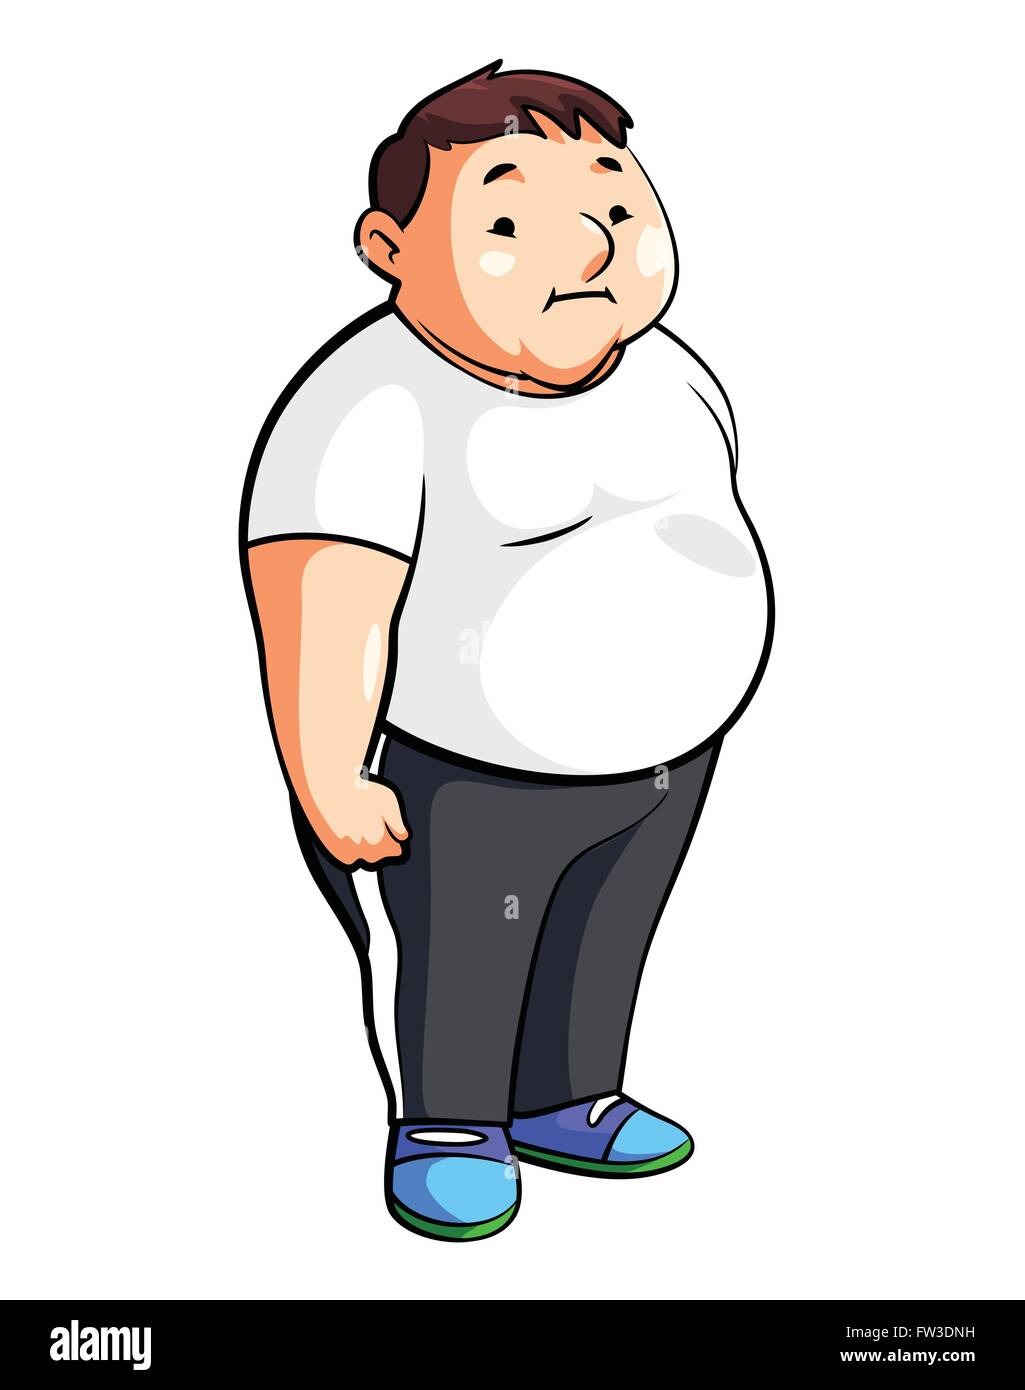 Fat Man Cartoon Illustration Stock Vector Image & Art - Alamy